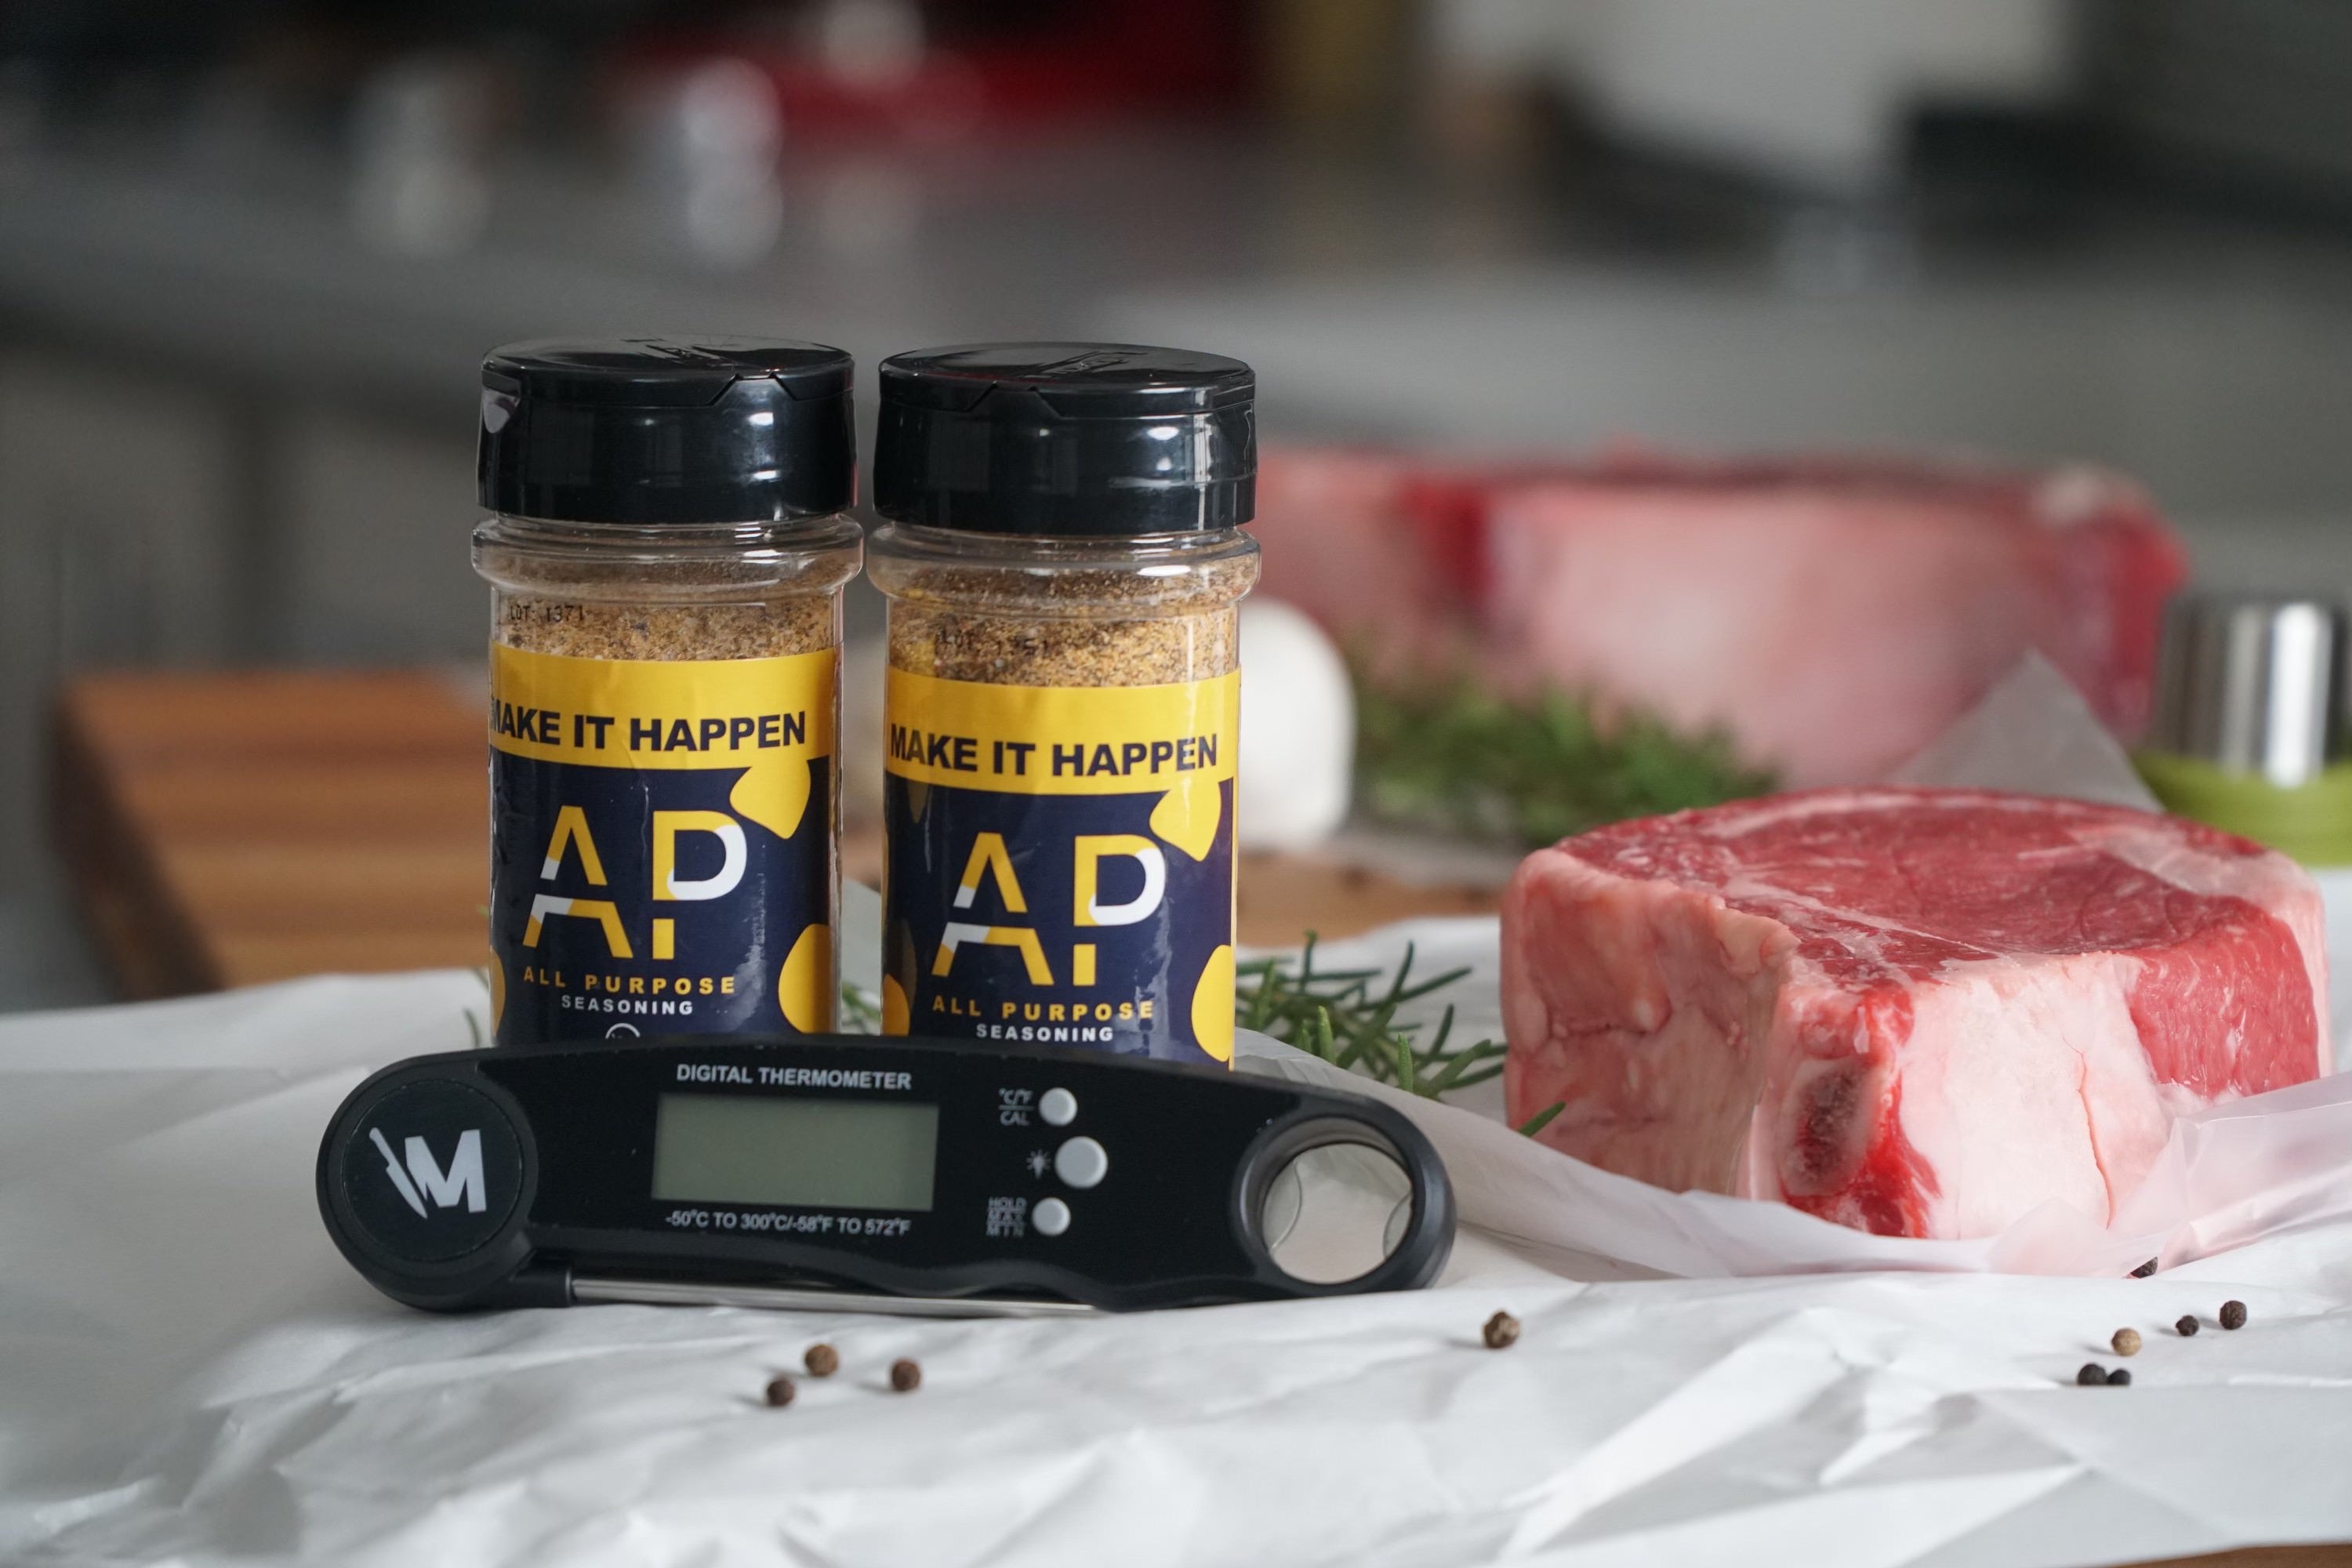 Mr. Steak Digital Meat Thermometer